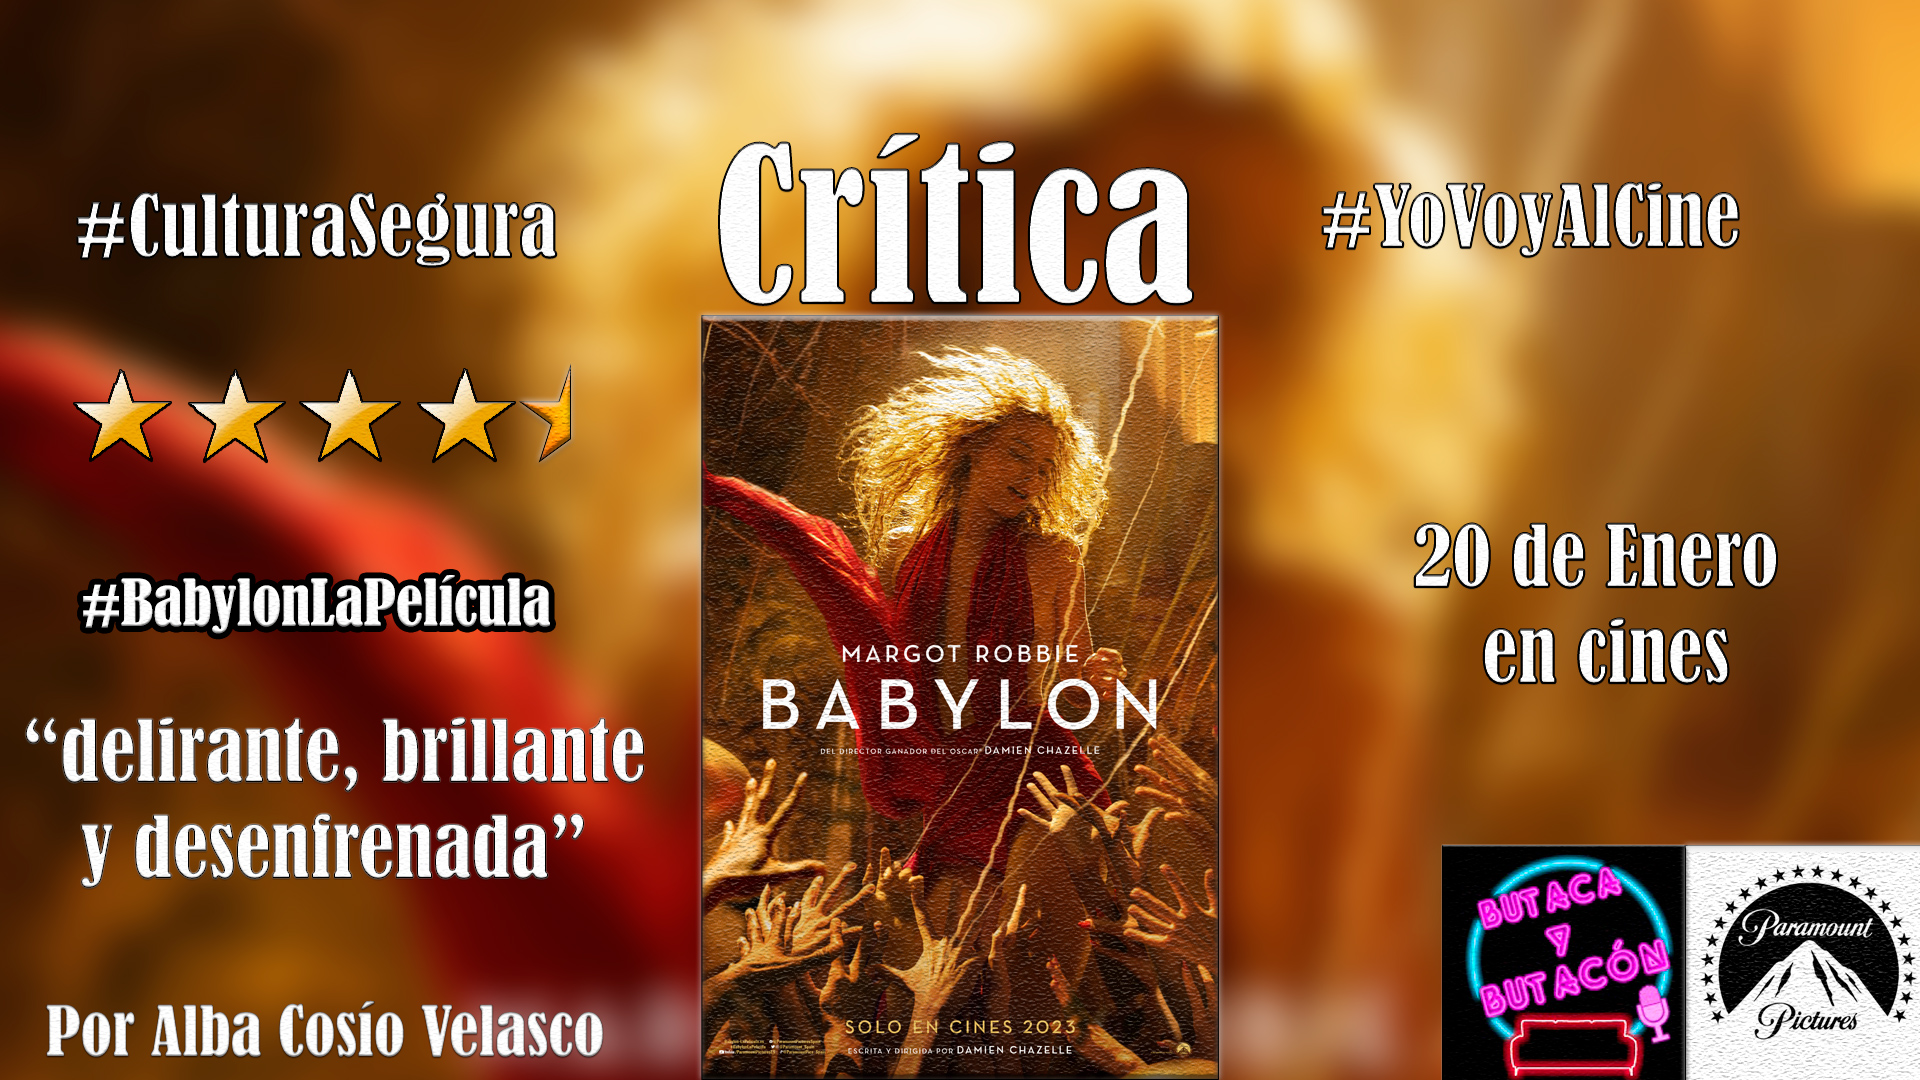 ‘Babylon’: una delirante historia del cine